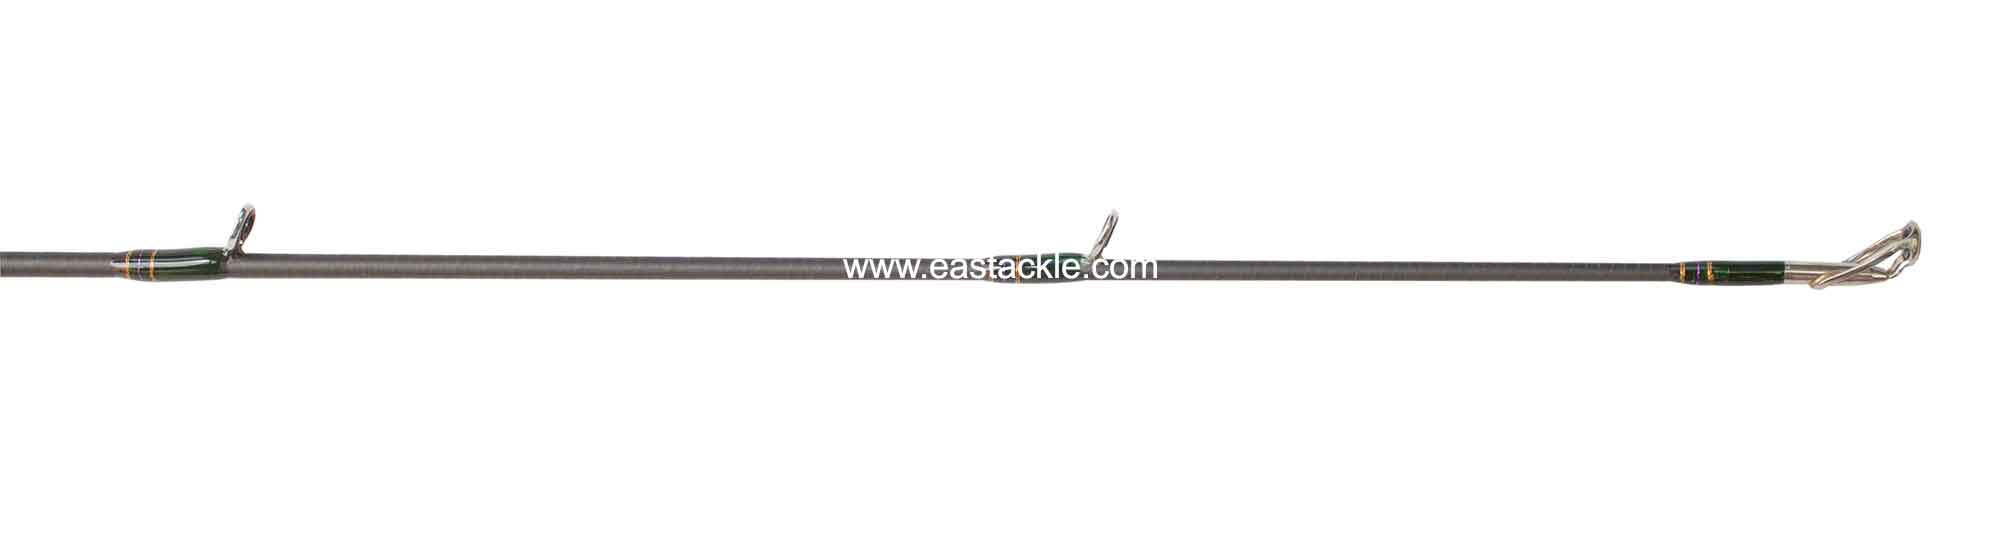 Megabass - Orochi XX - F5-610XX - SPINNERBAIT SPECIAL - Bait Casting Rod - Tip Section